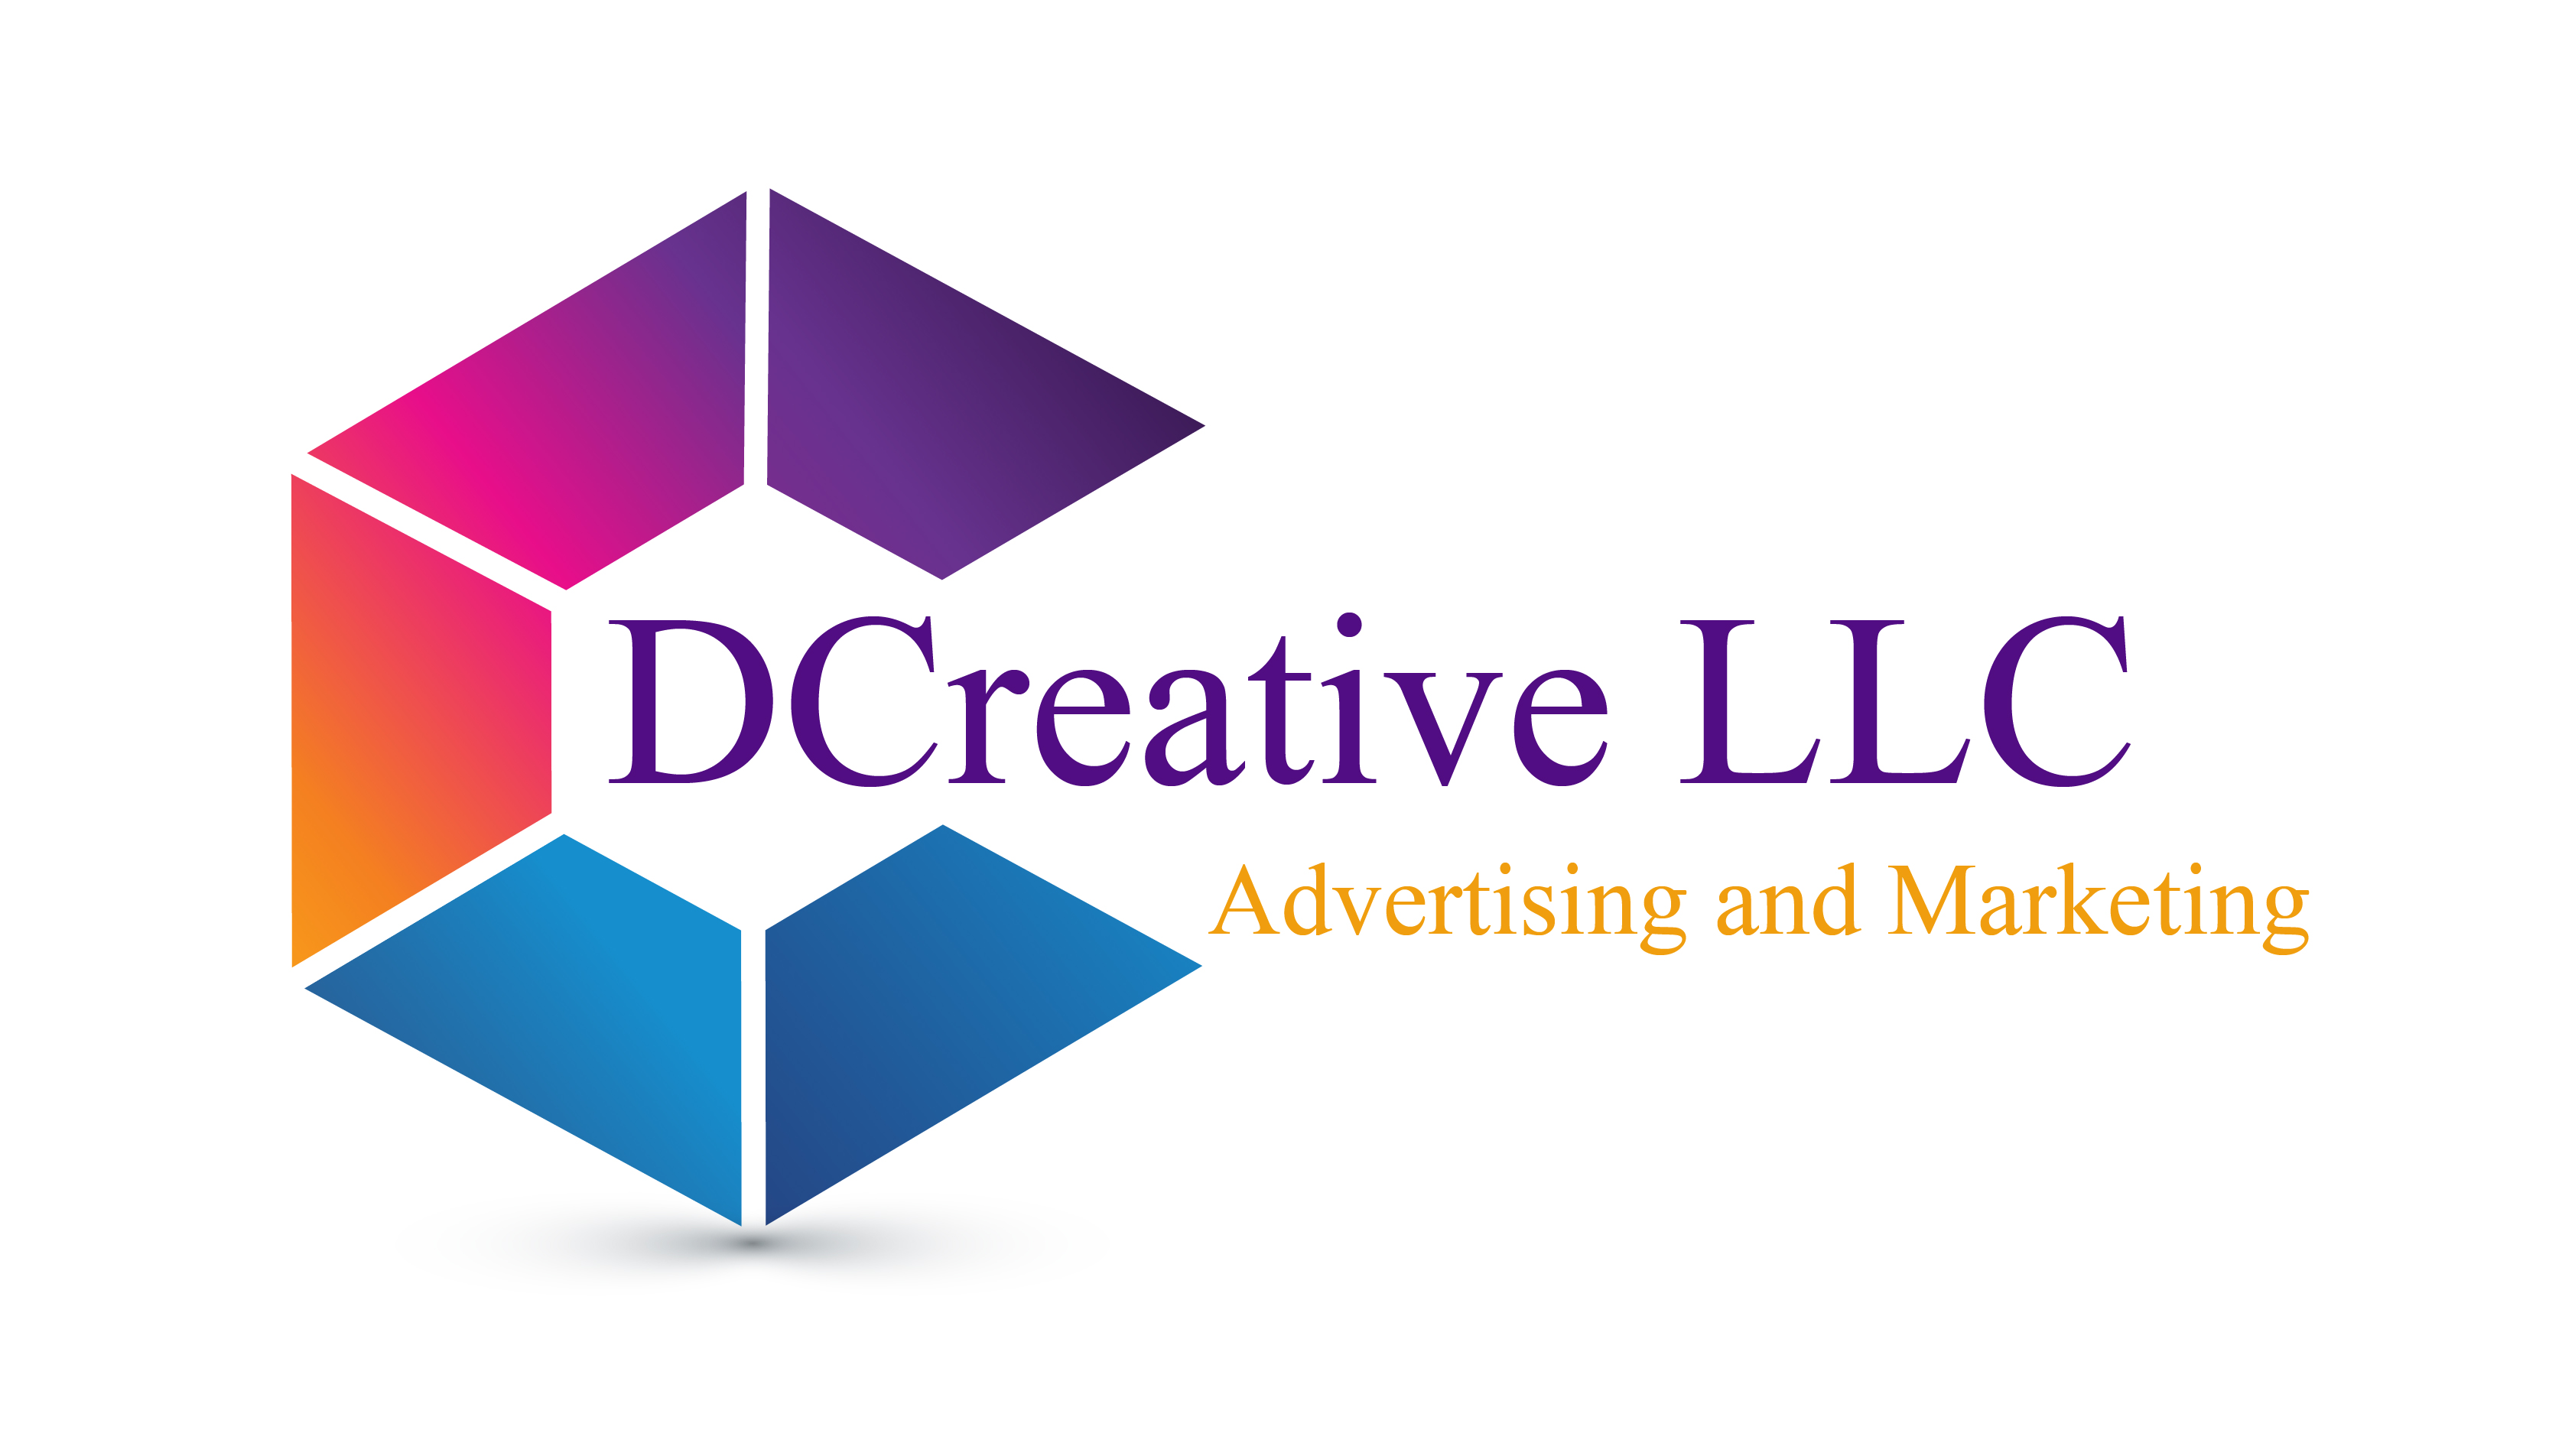 CDCreative LLC